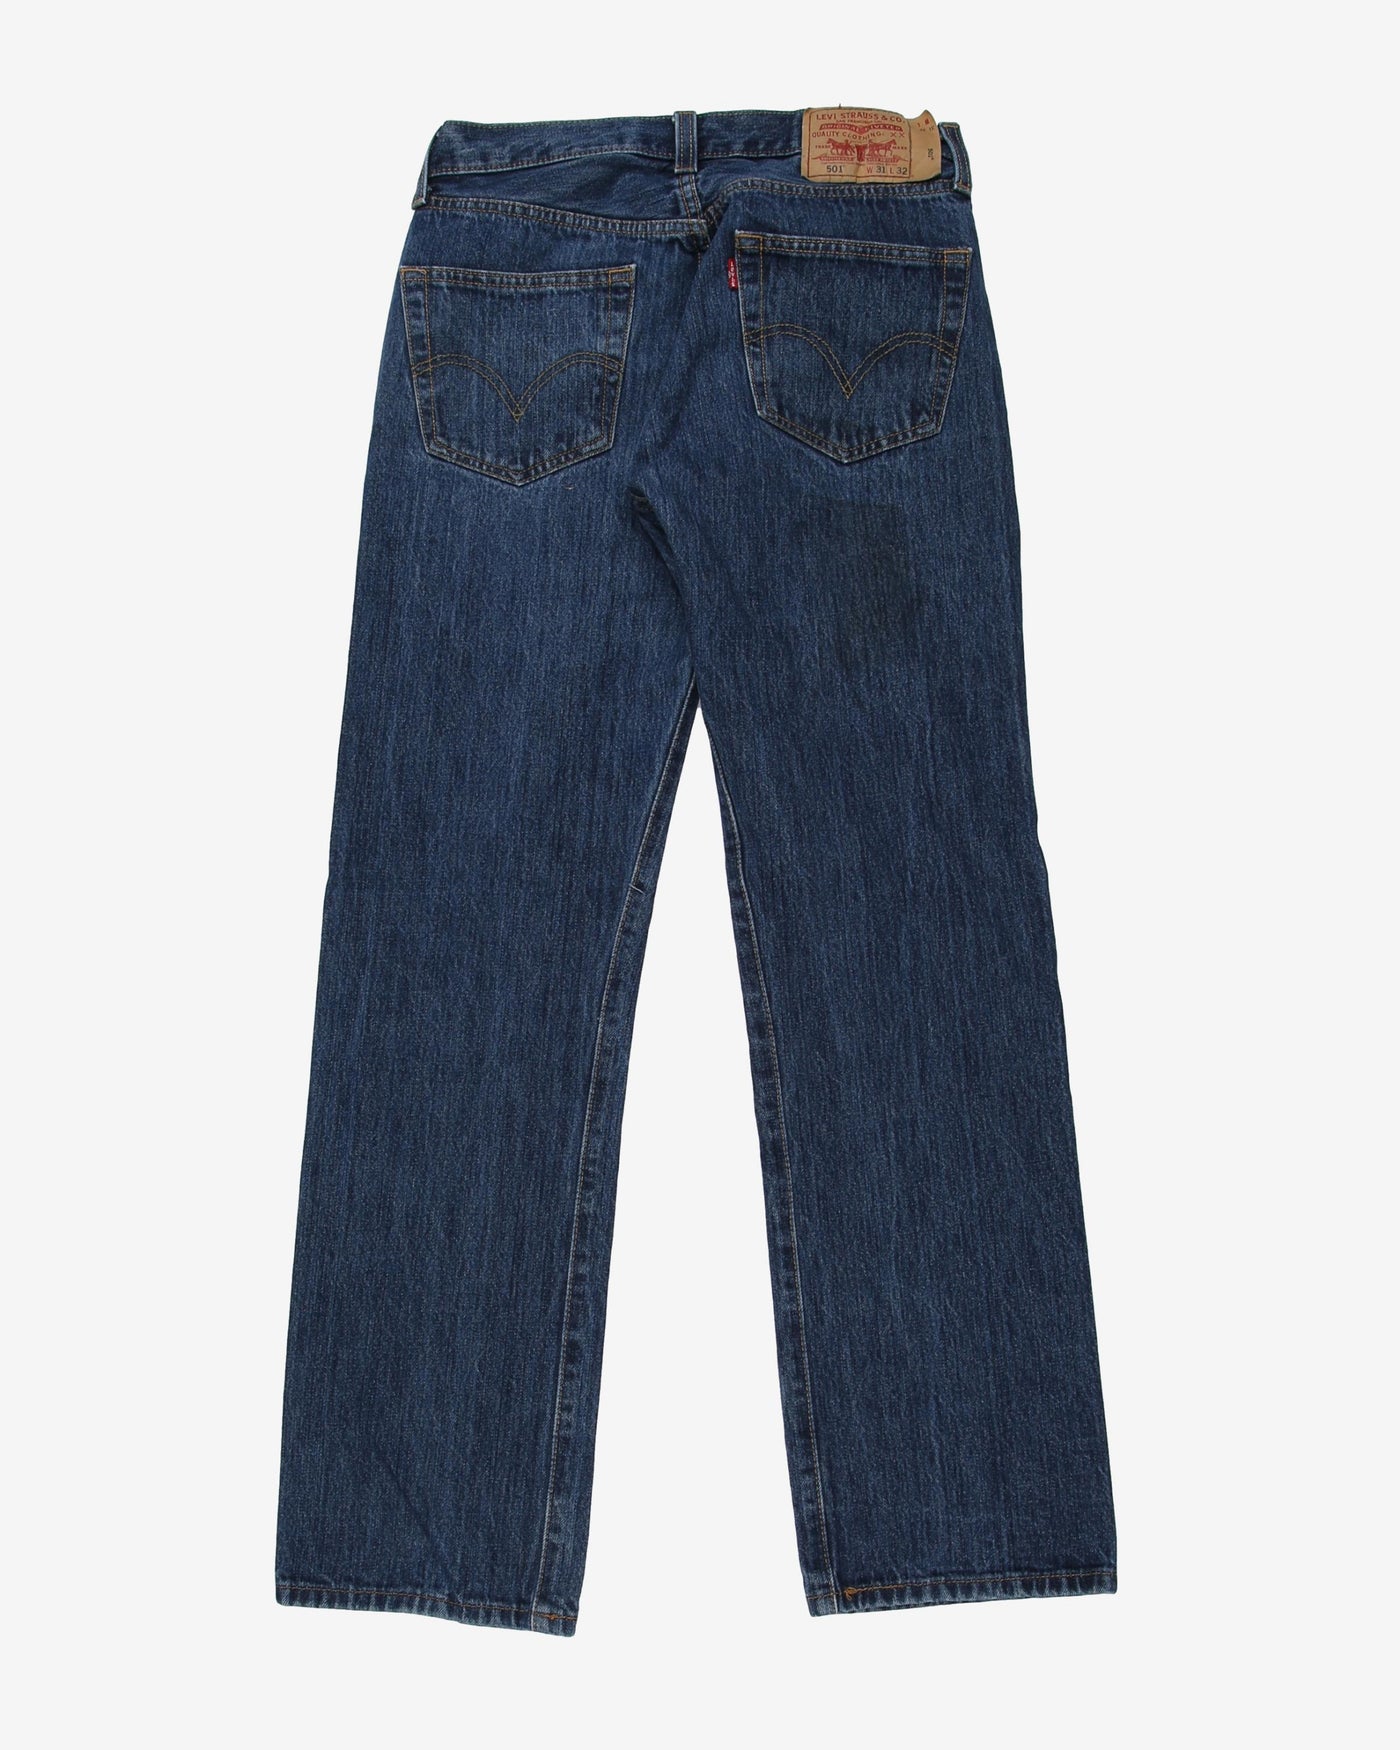 levis 501 mid wash indigo denim jeans - w30 l31